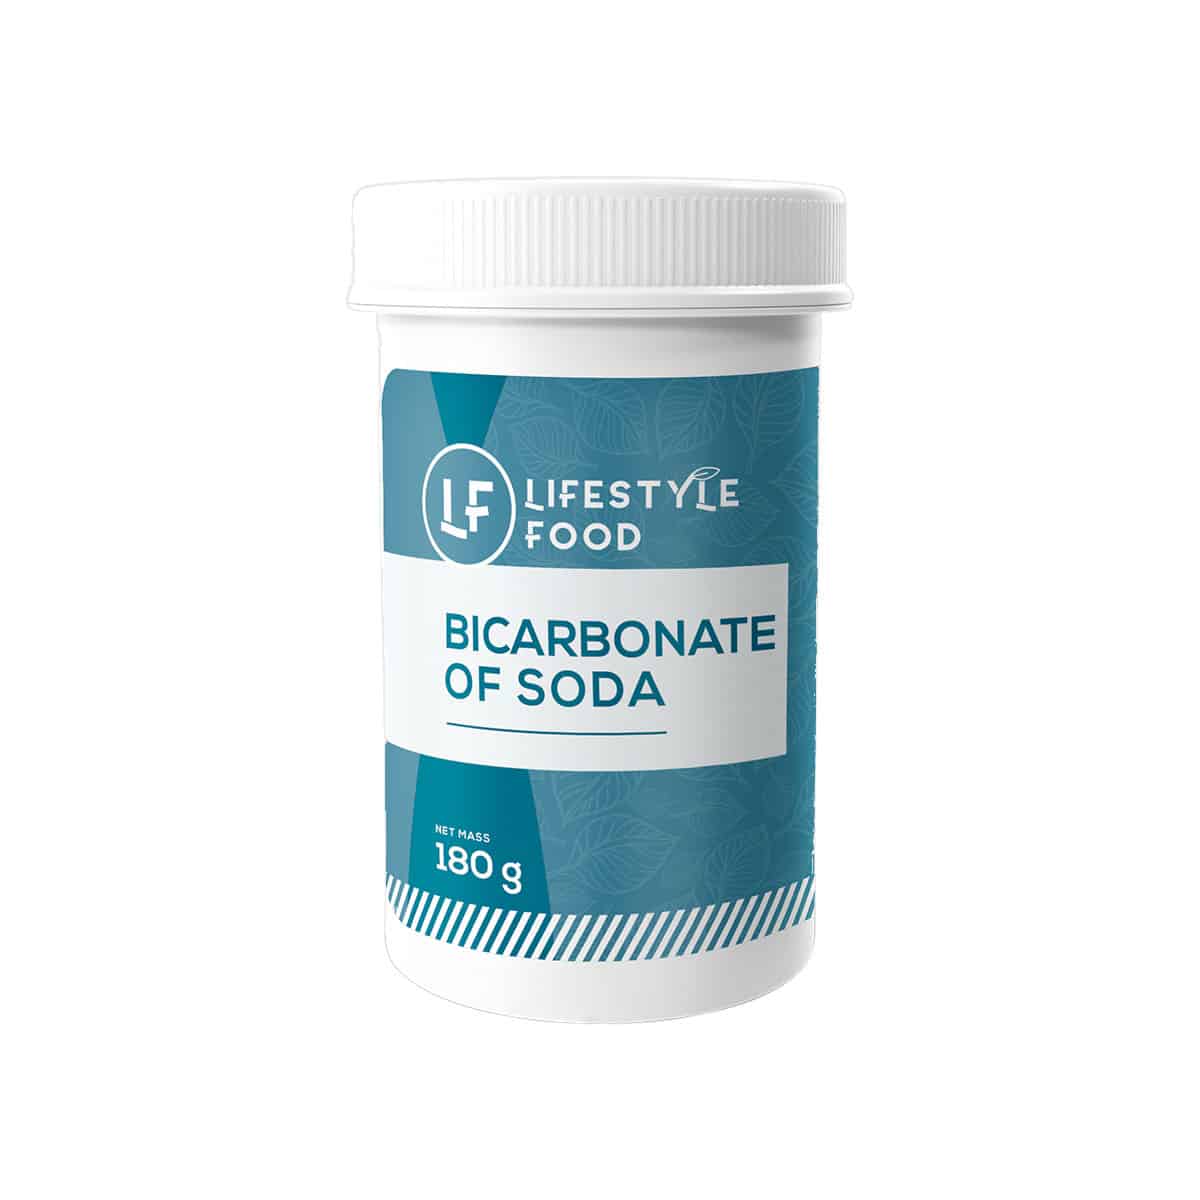 Lifestyle Food Bicarbonate Of Soda - 180g